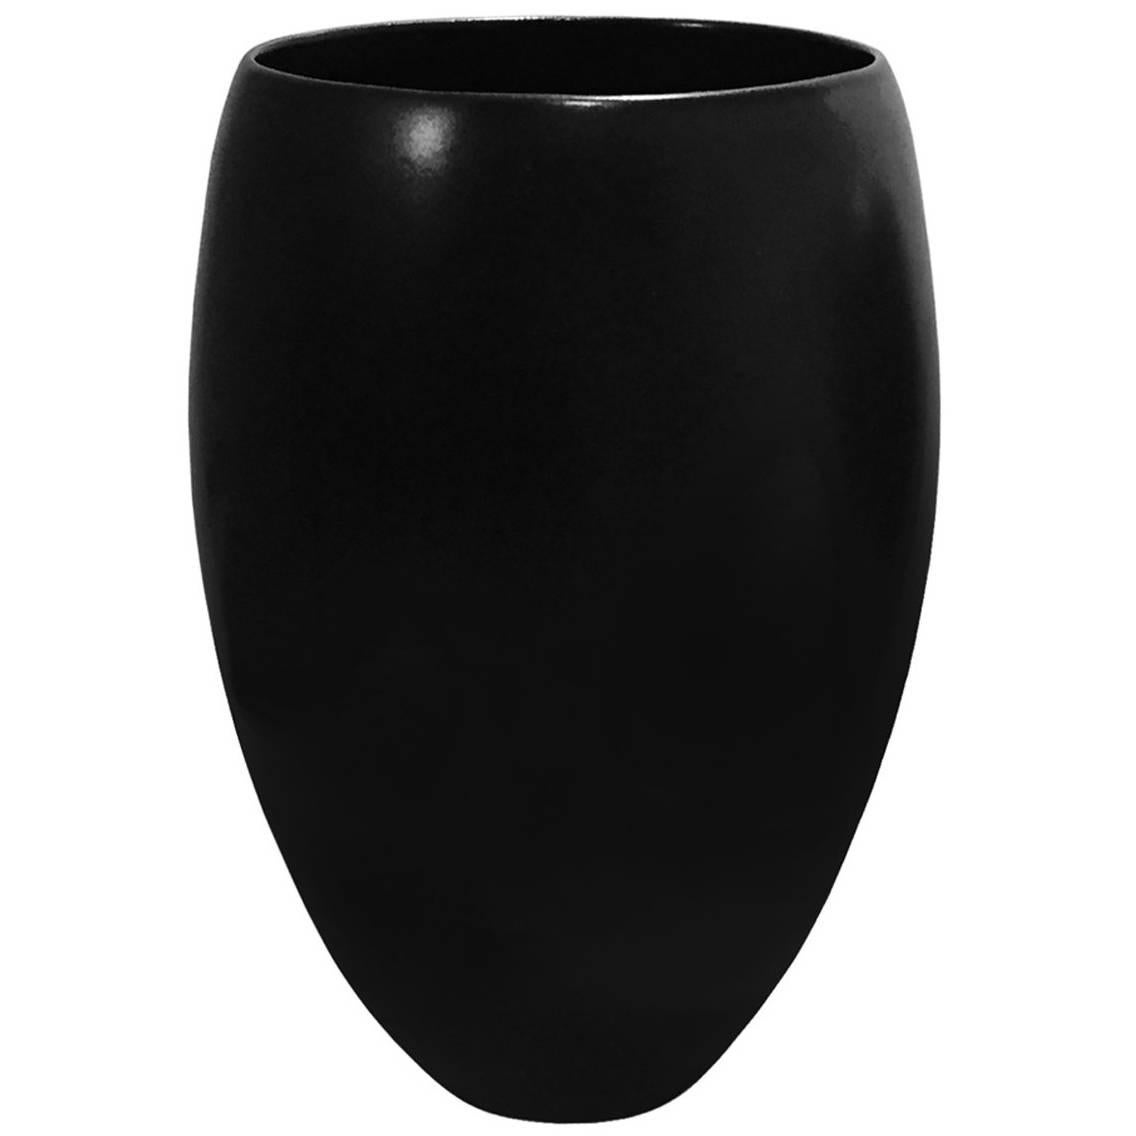 Tall Black Luster Ceramic Wide Mouth Vase by Sandi Fellman